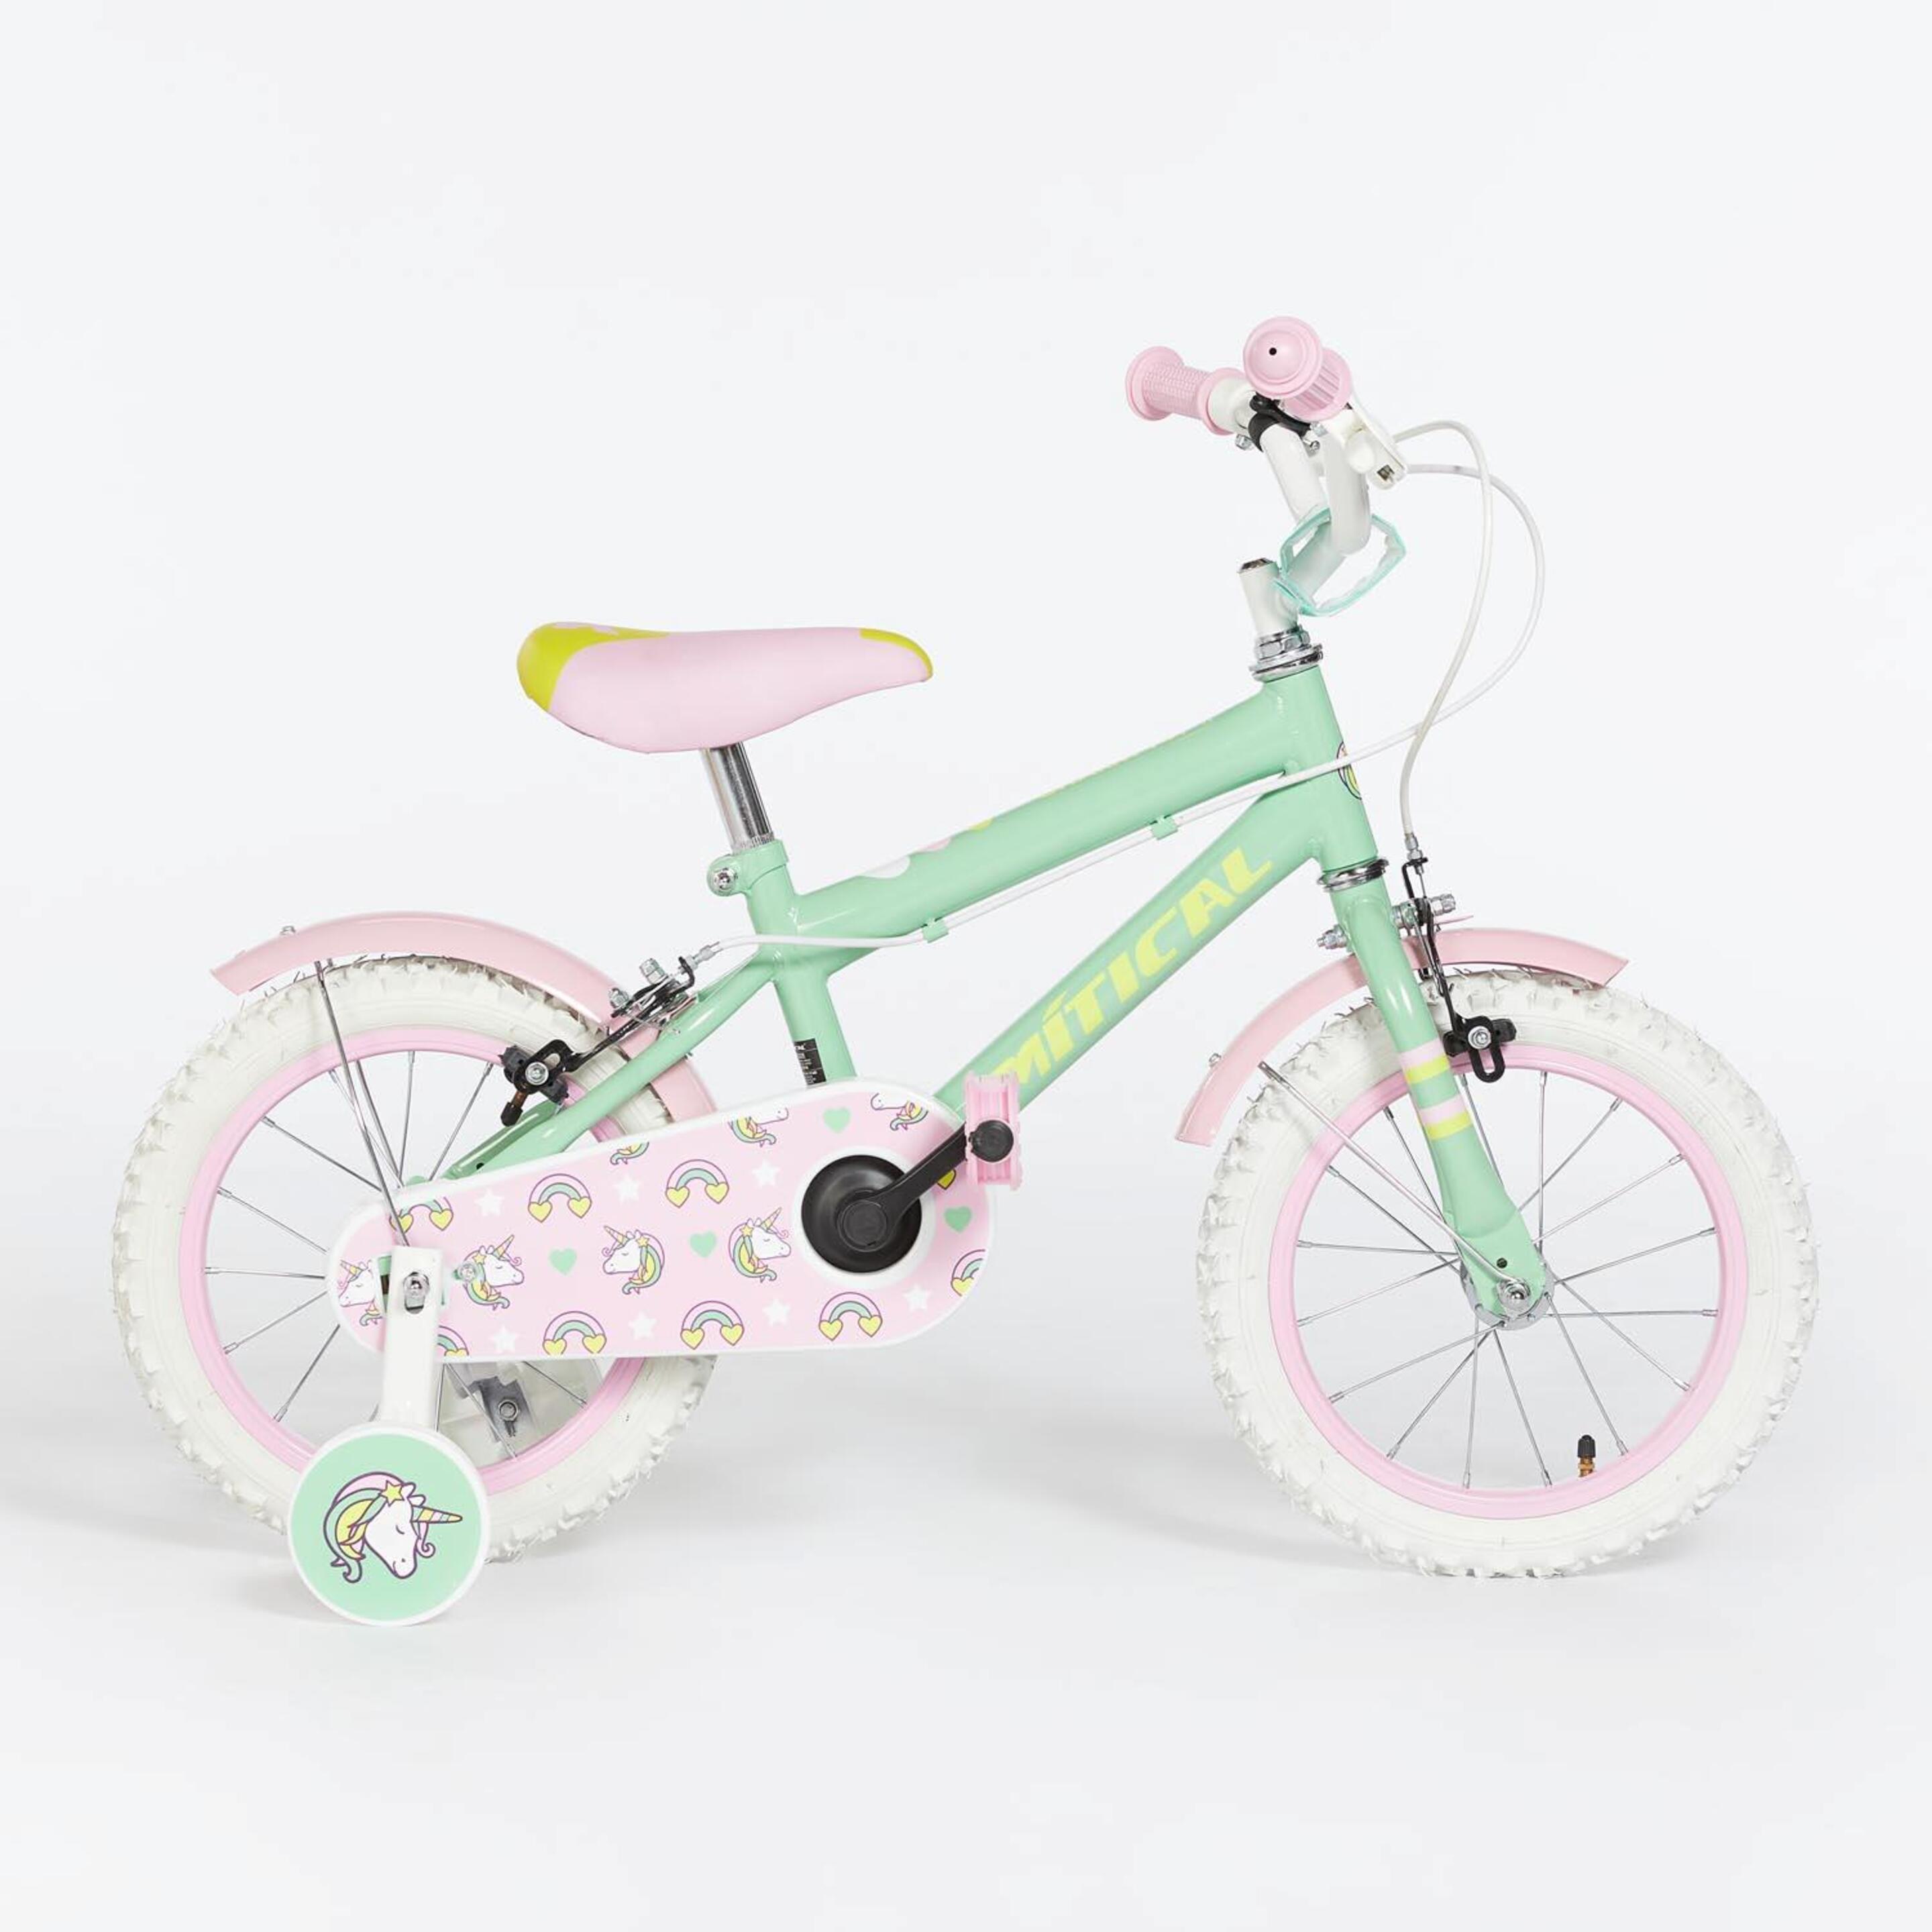 Mítical Charm 141 14" - verde - Bicicleta Niños